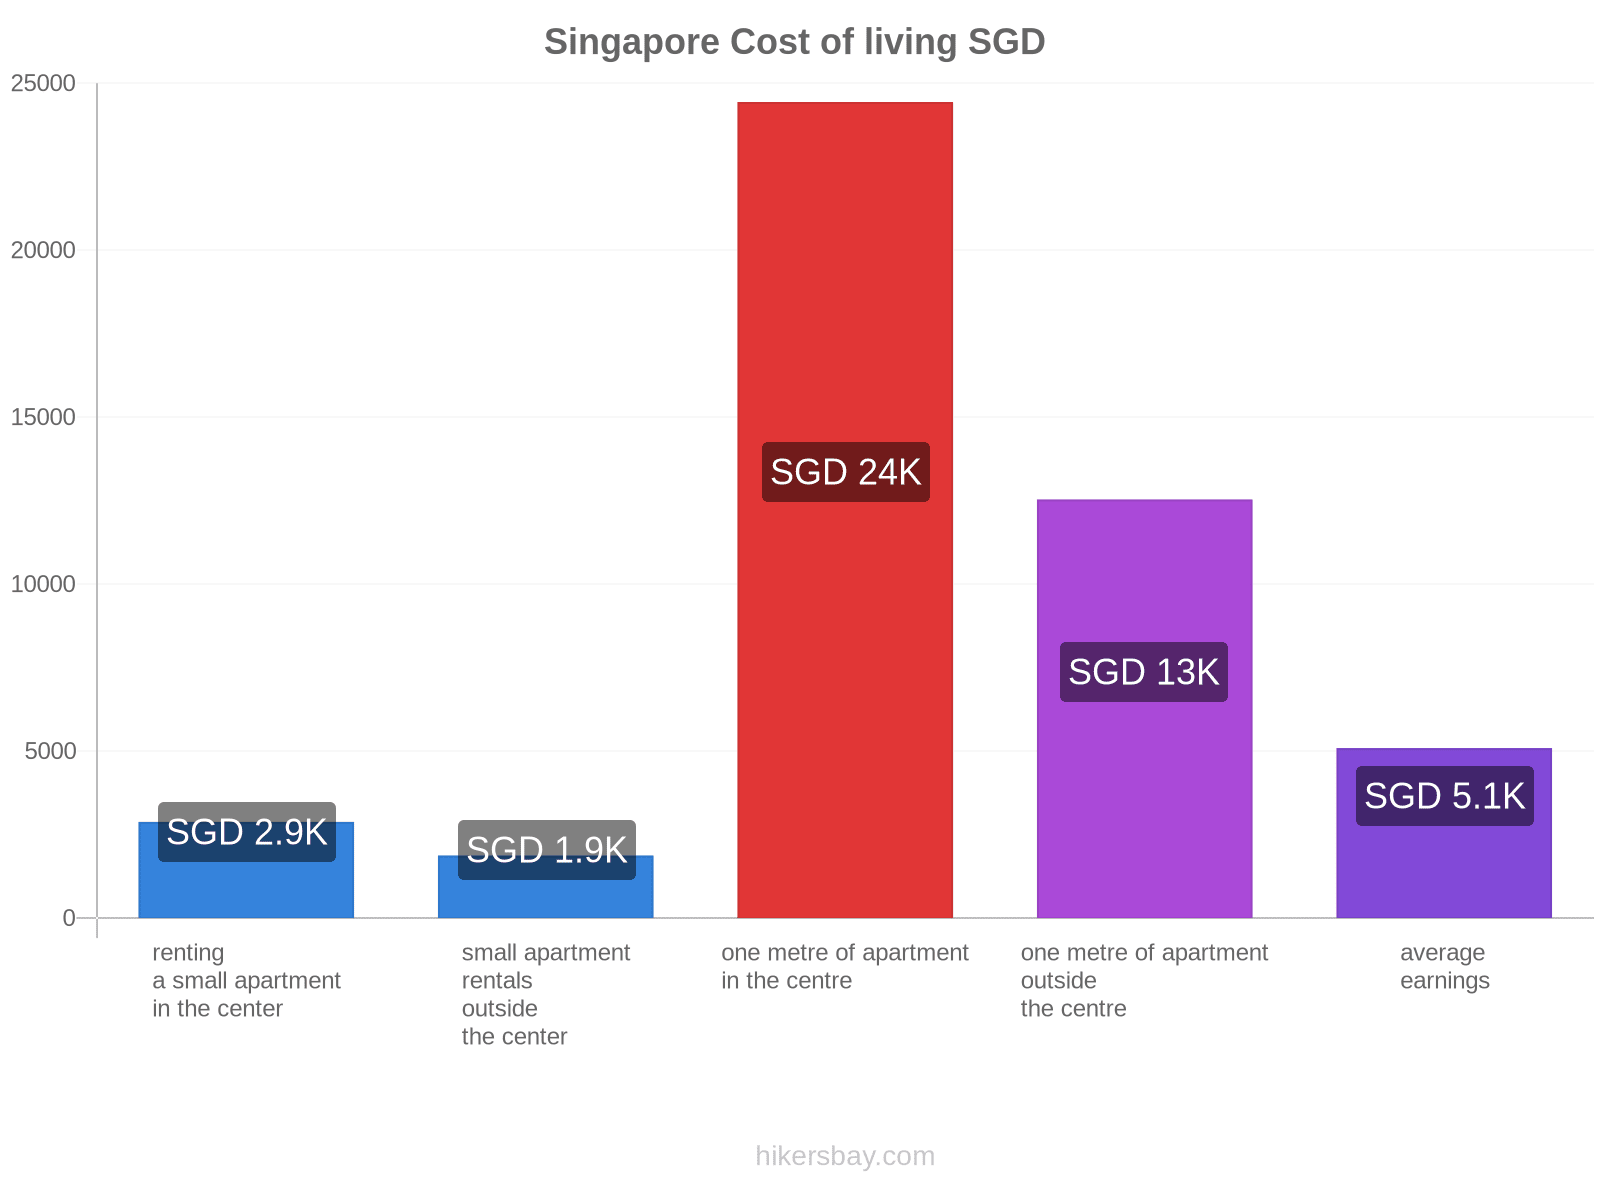 Singapore cost of living hikersbay.com